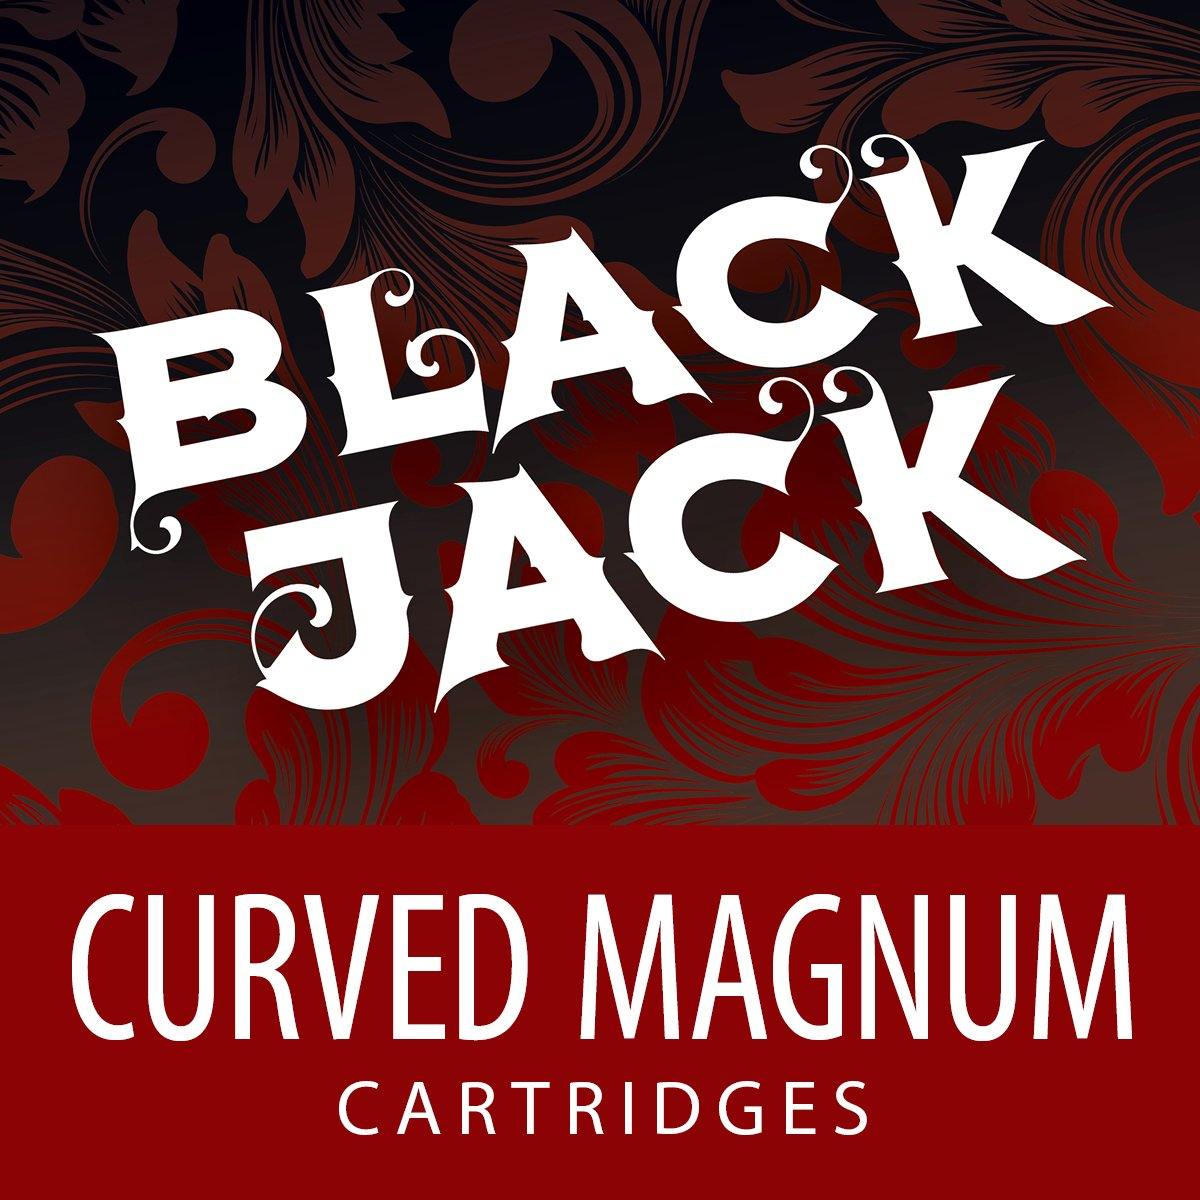 Black Jack Curved Magnum Cartridge - Higher Level Tattoo Supply